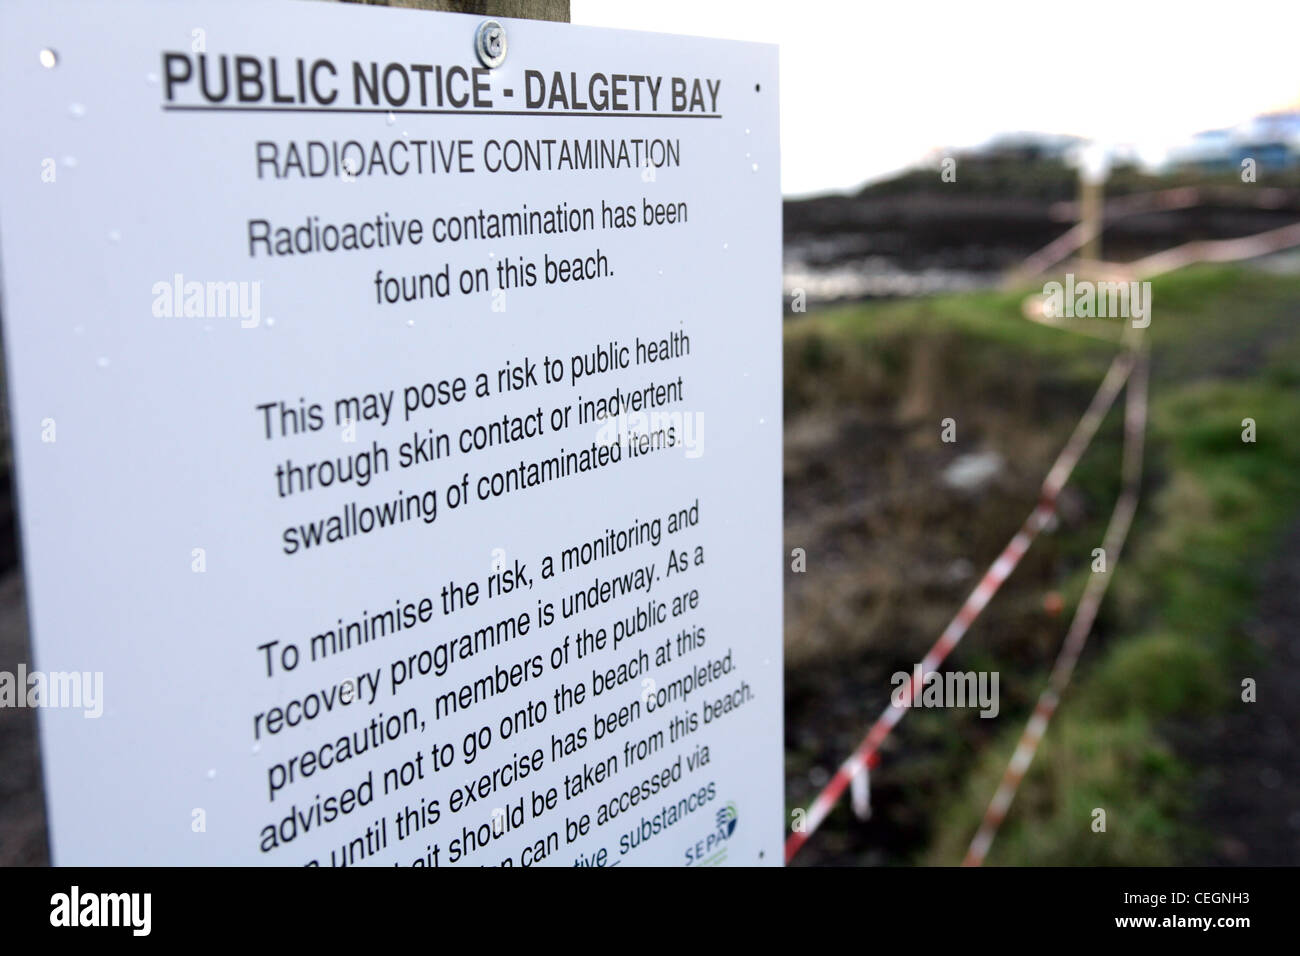 L'avis de contamination radioactive le long de la côte. Banque D'Images